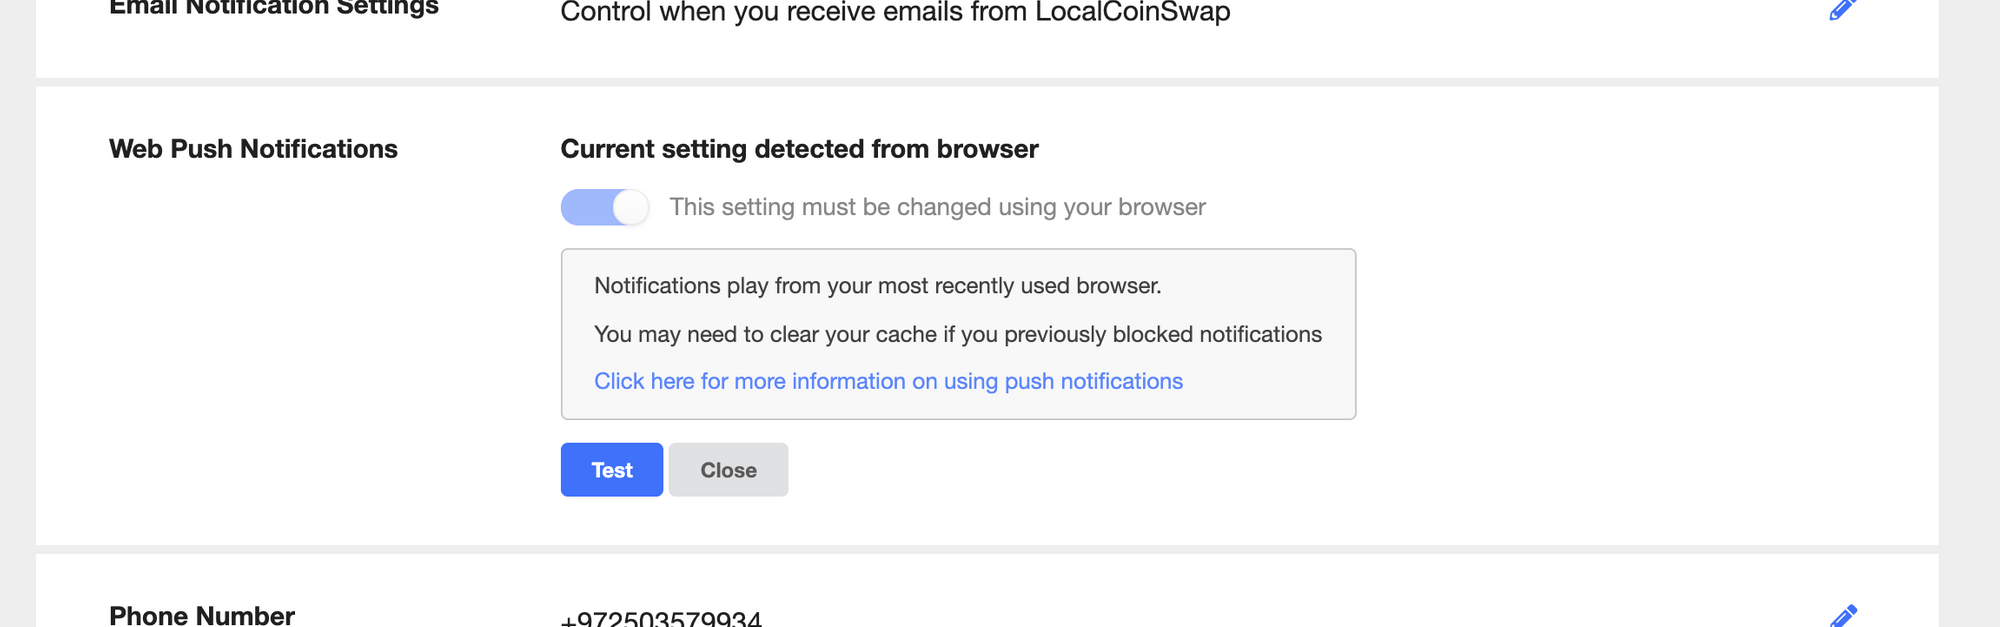 enabling push notifications on LocalCoinSwap